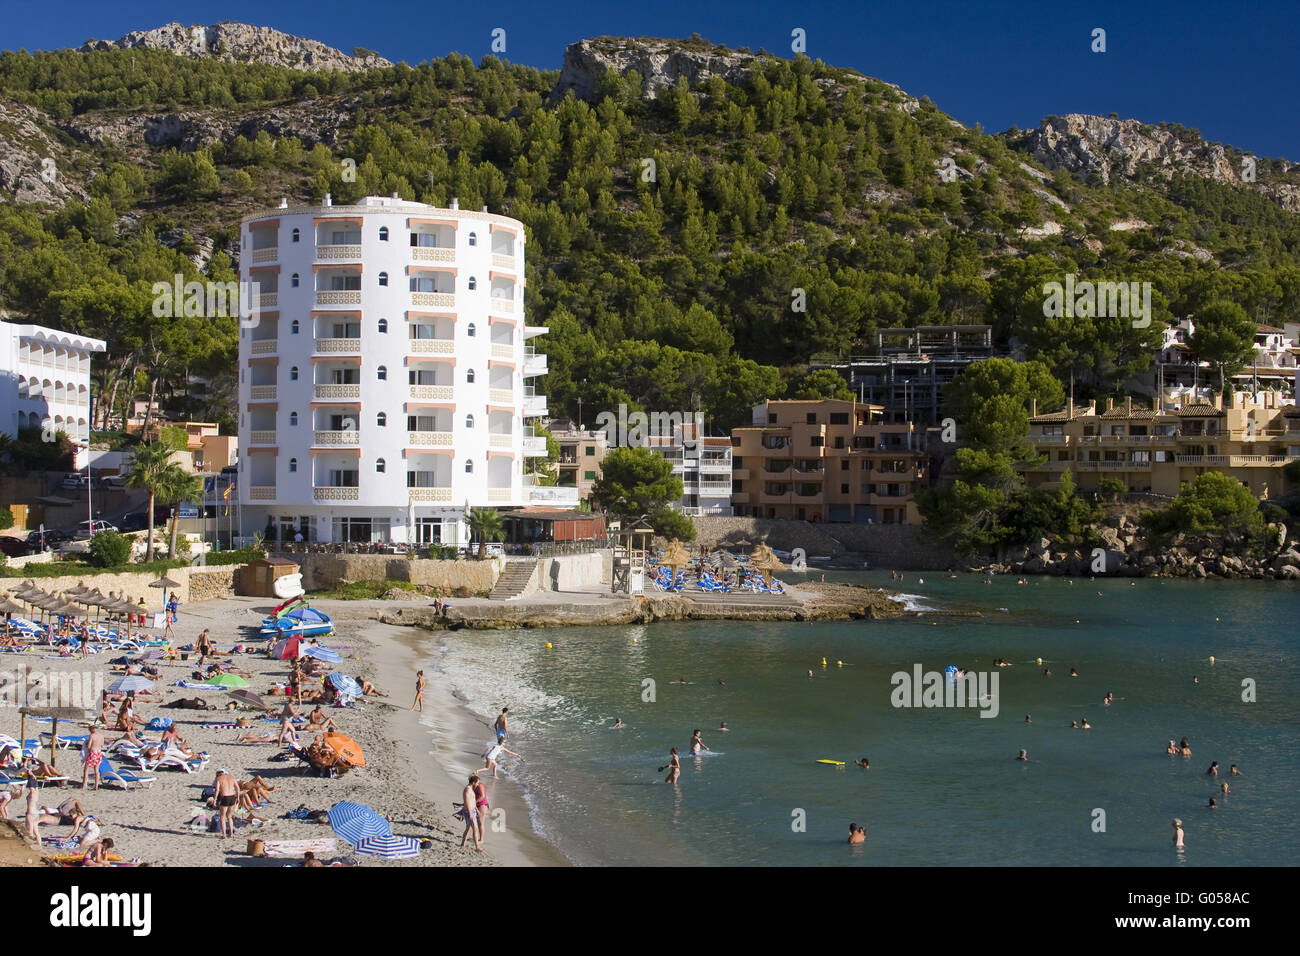 Sandy beach of Santa Ponsa, Majorca, Balearic isla Stock Photo